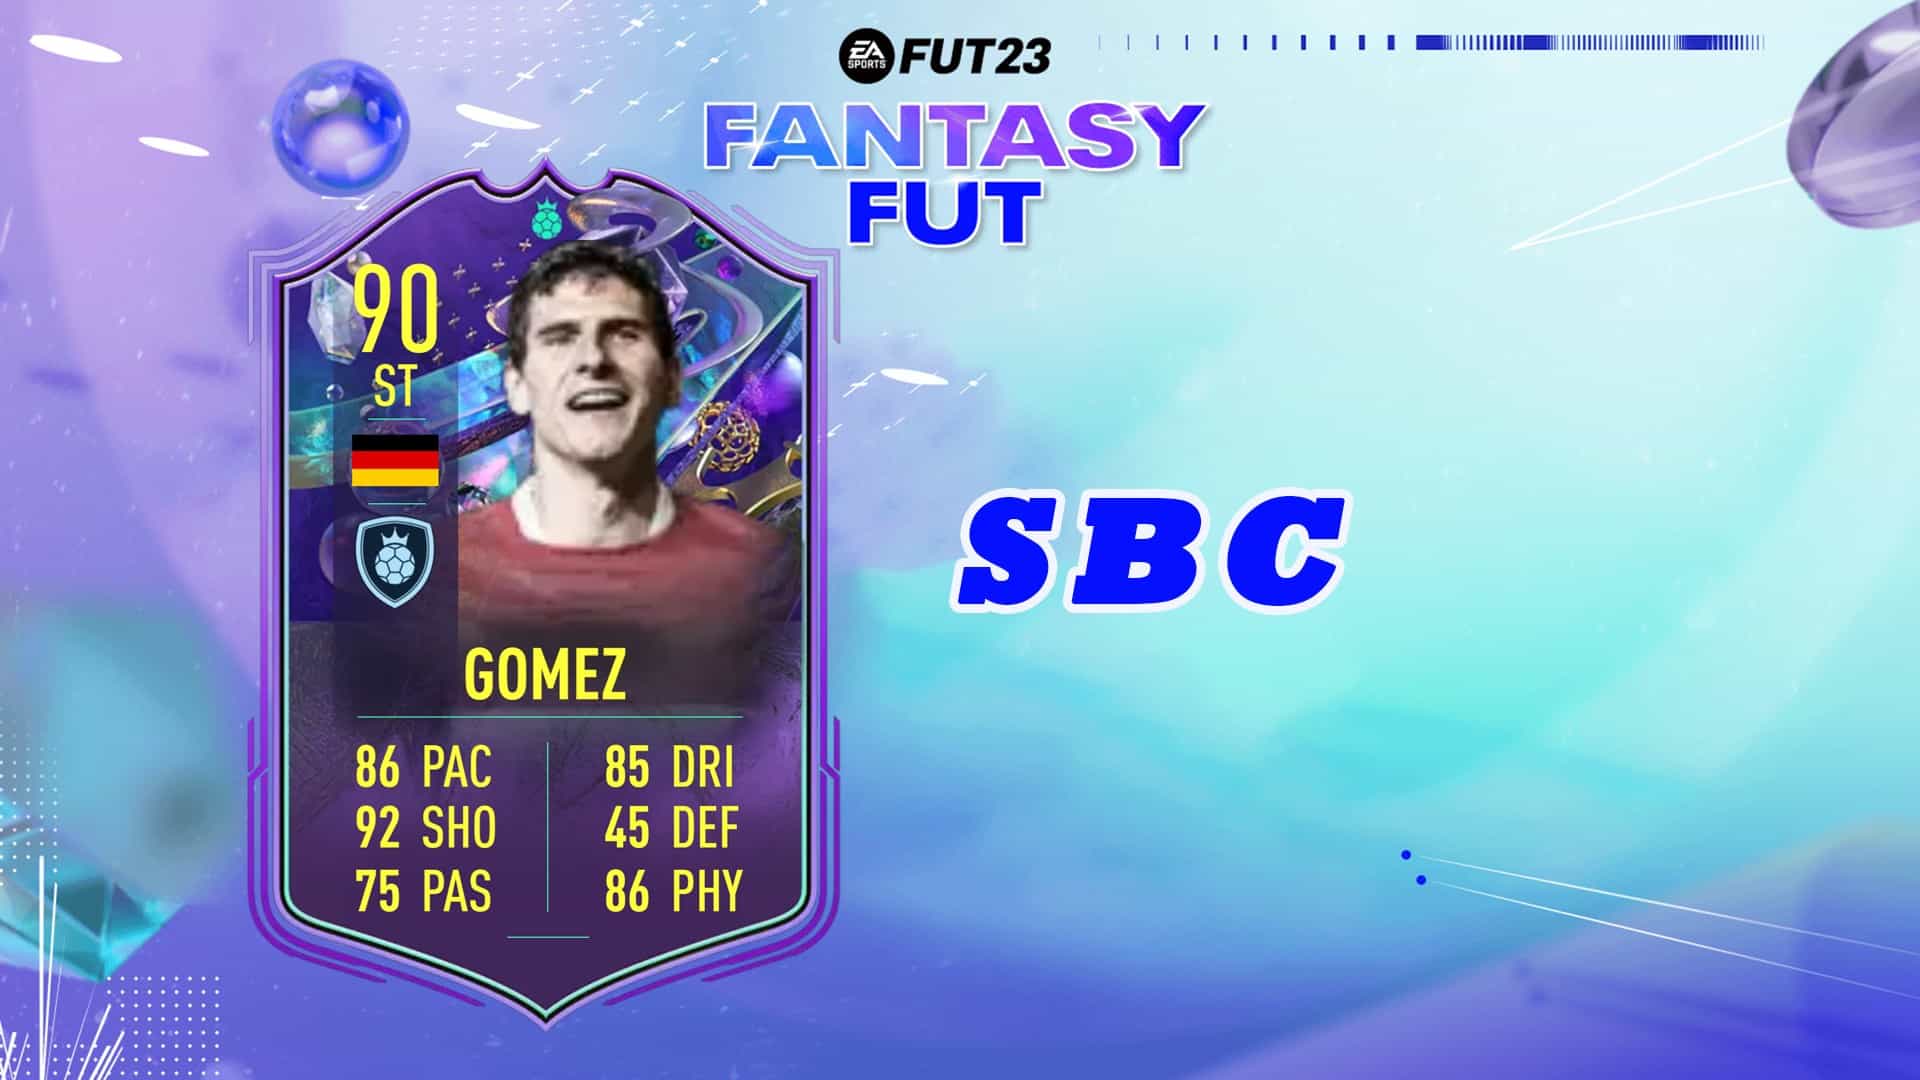 Mario Gomez Fantasy FUT SBC: FIFA 23 leak hints at Mario Gomez Fantasy FUT  SBC coming to Ultimate Team